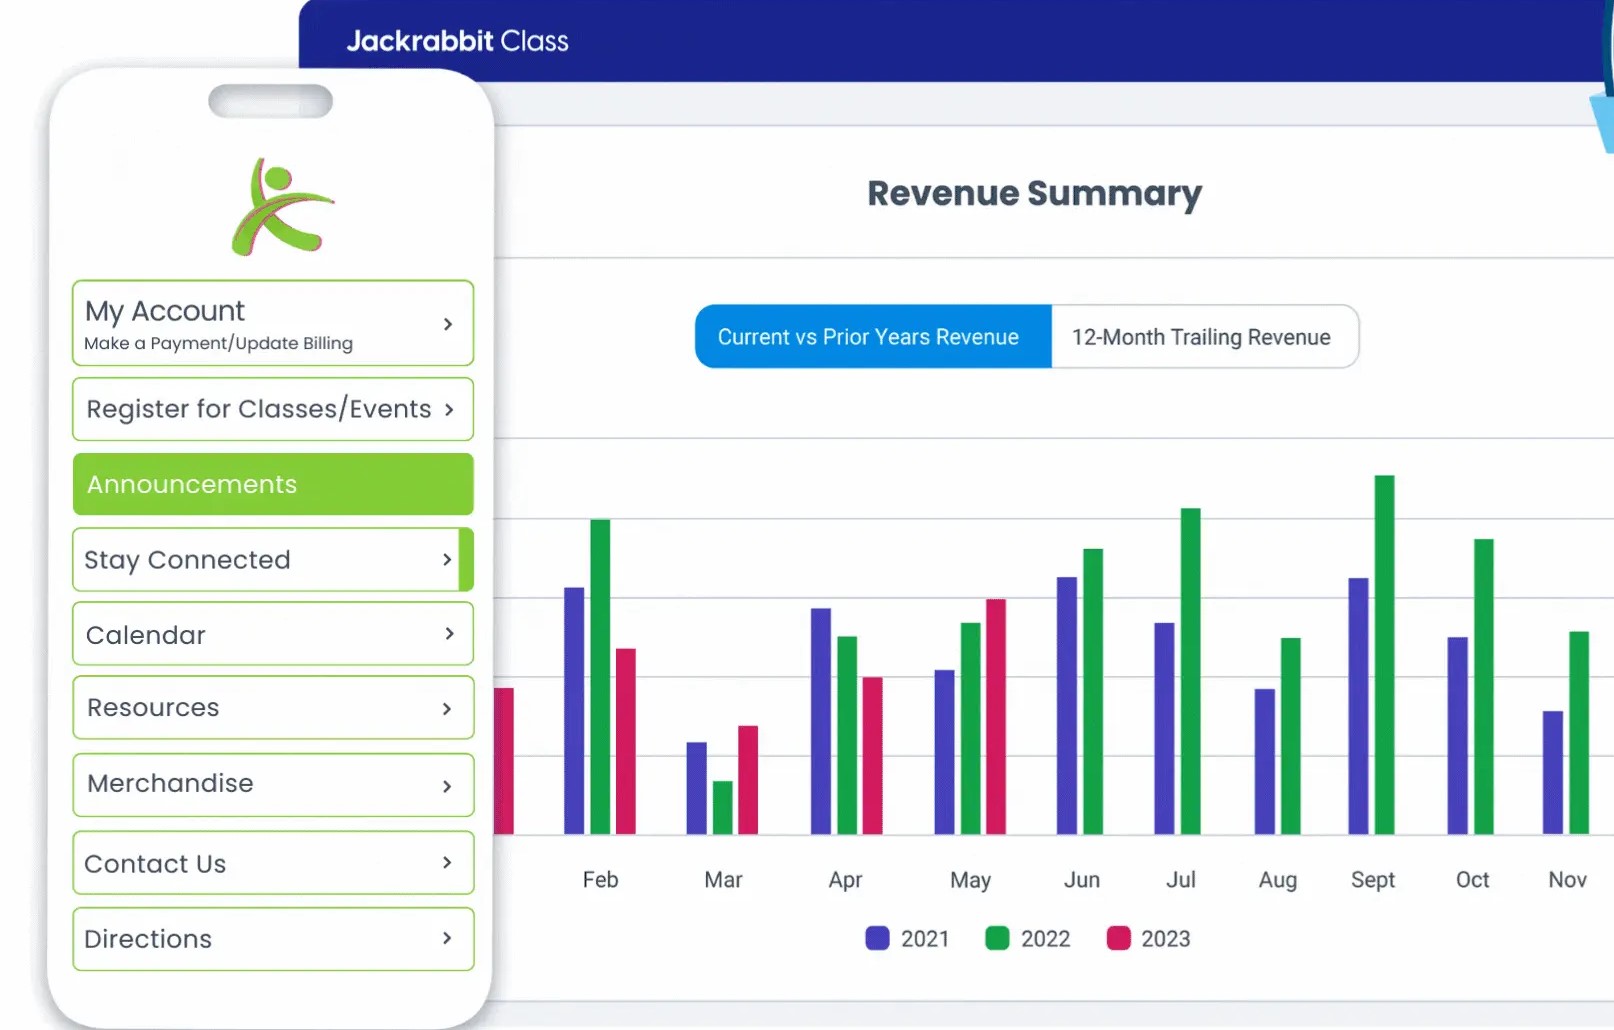 Jackrabbit Swim revenue summary